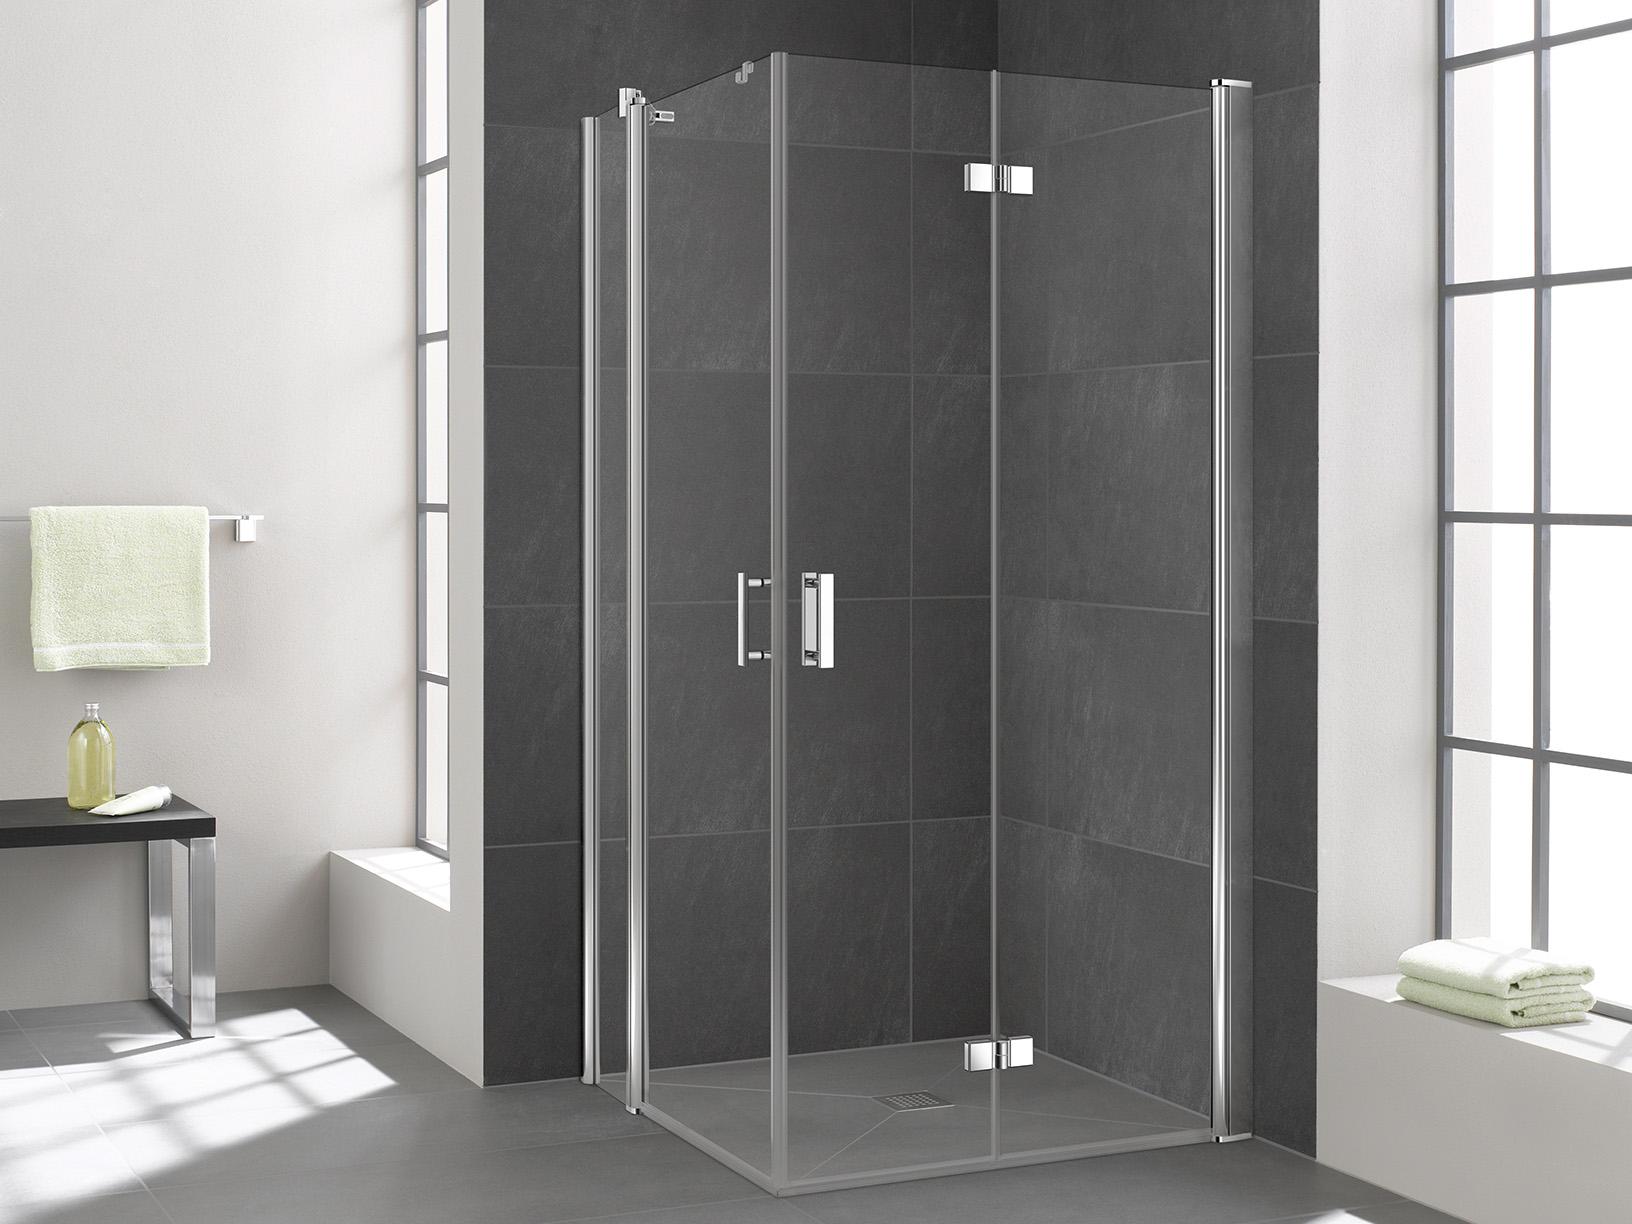 Kermi profile shower enclosure, DIGA two-part corner entry (hinged folding doors) – half part